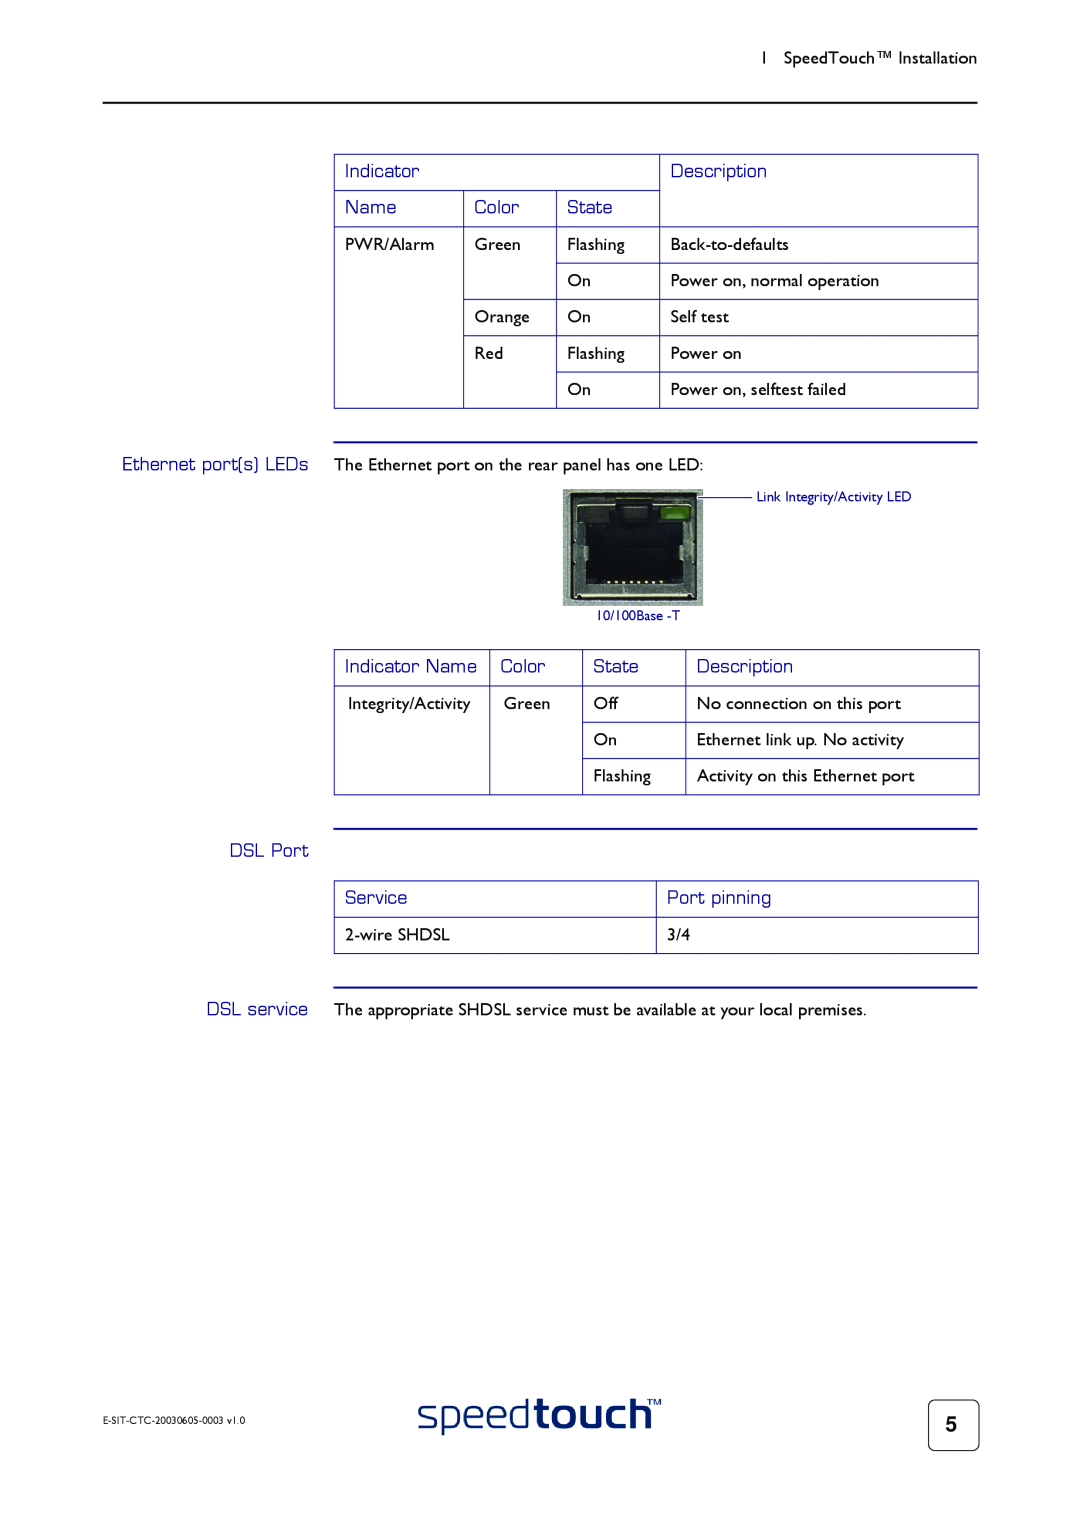 Technicolor - Thomson 605S manual Link Integrity/Activity LED 10/100Base -T 